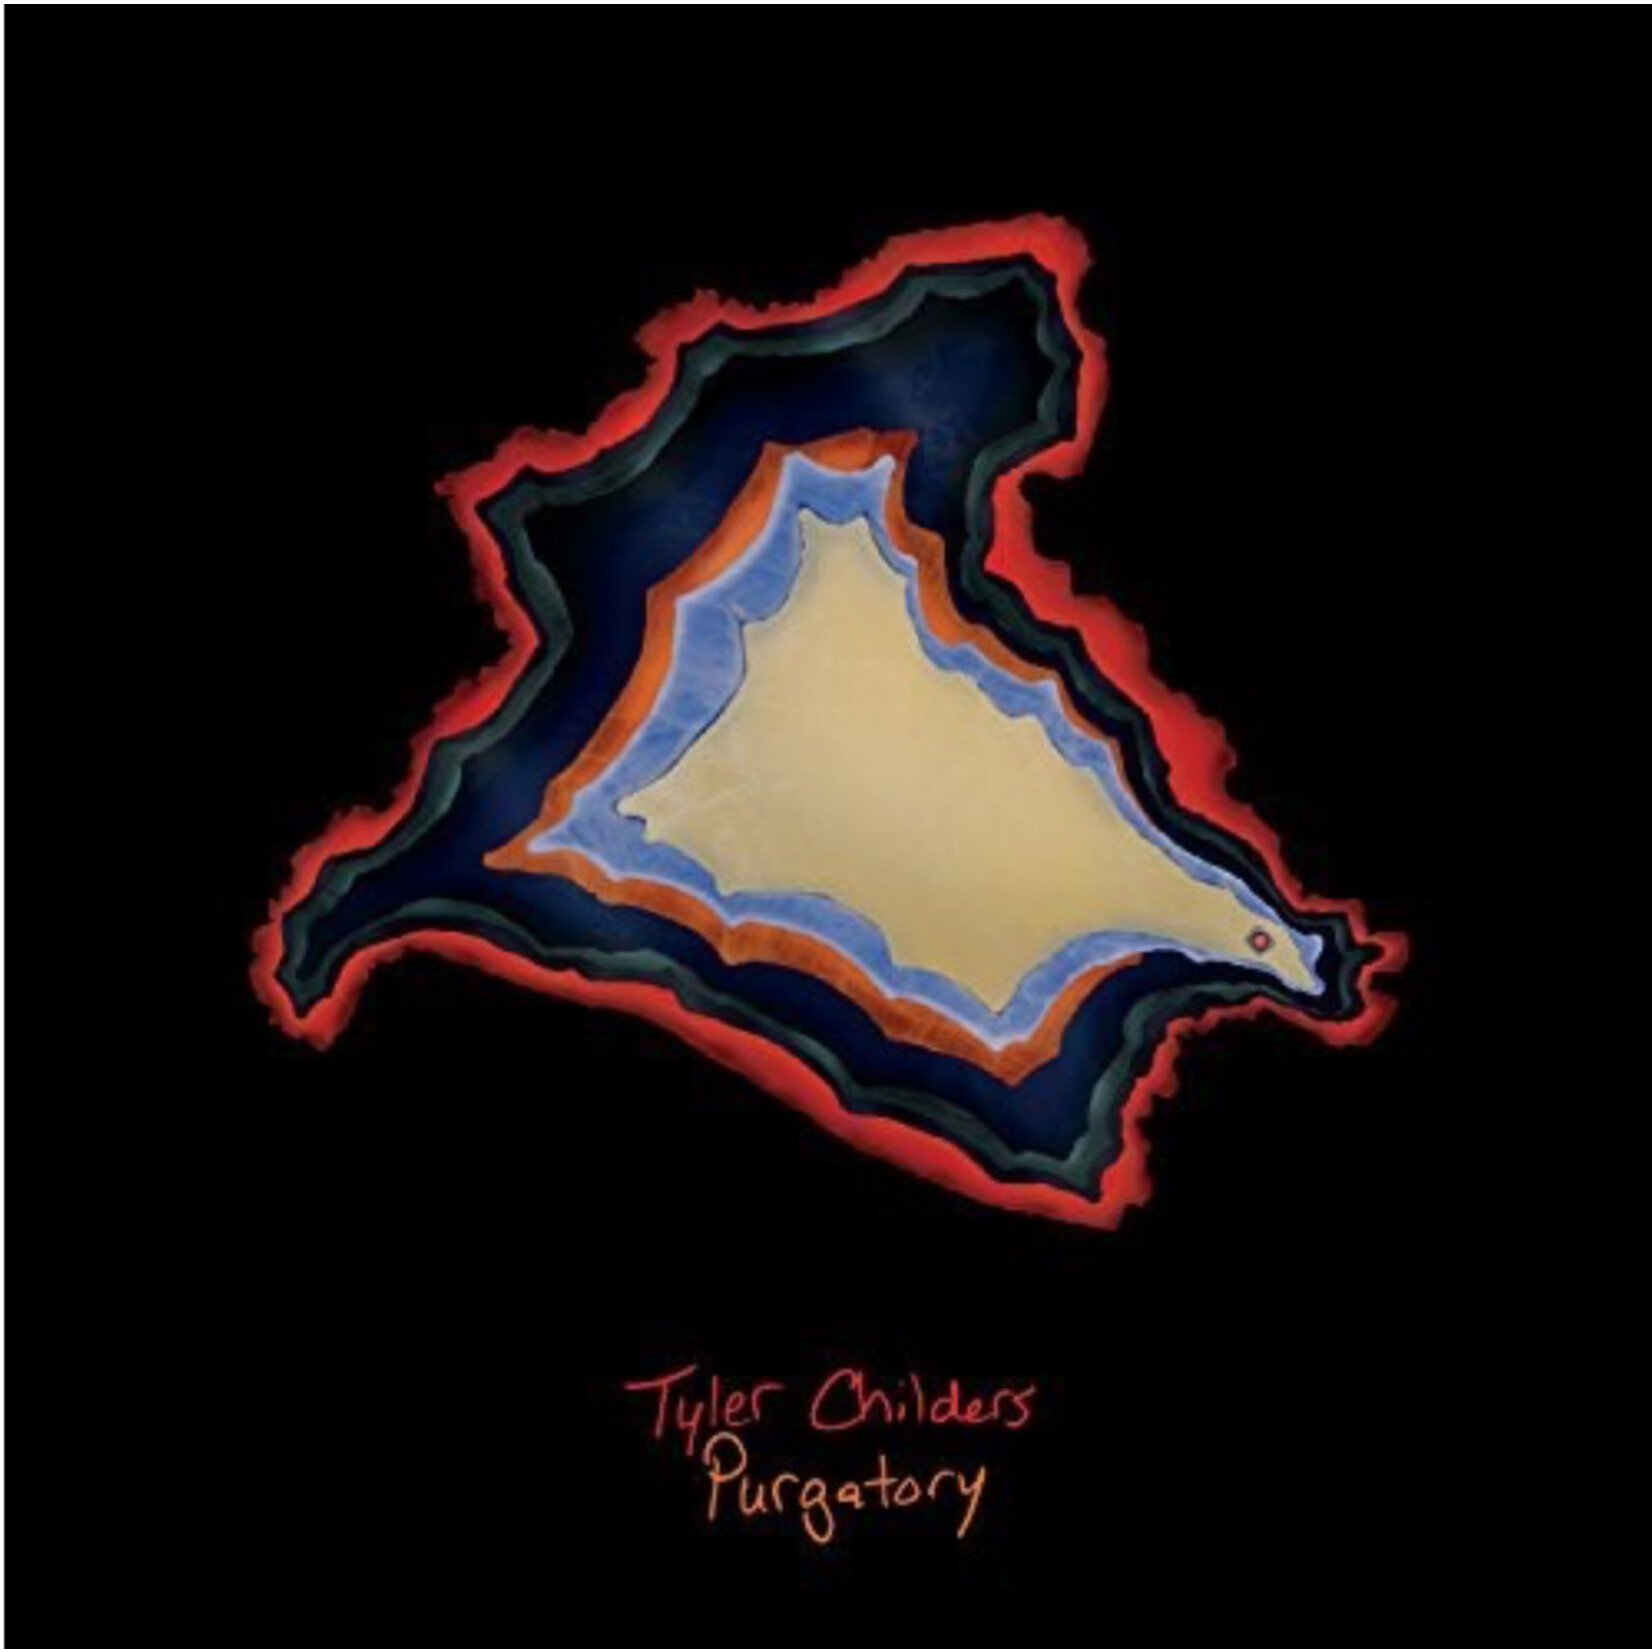 Tyler Childers - Purgatory - HHR001 1 - Vinyl LP (NEW)